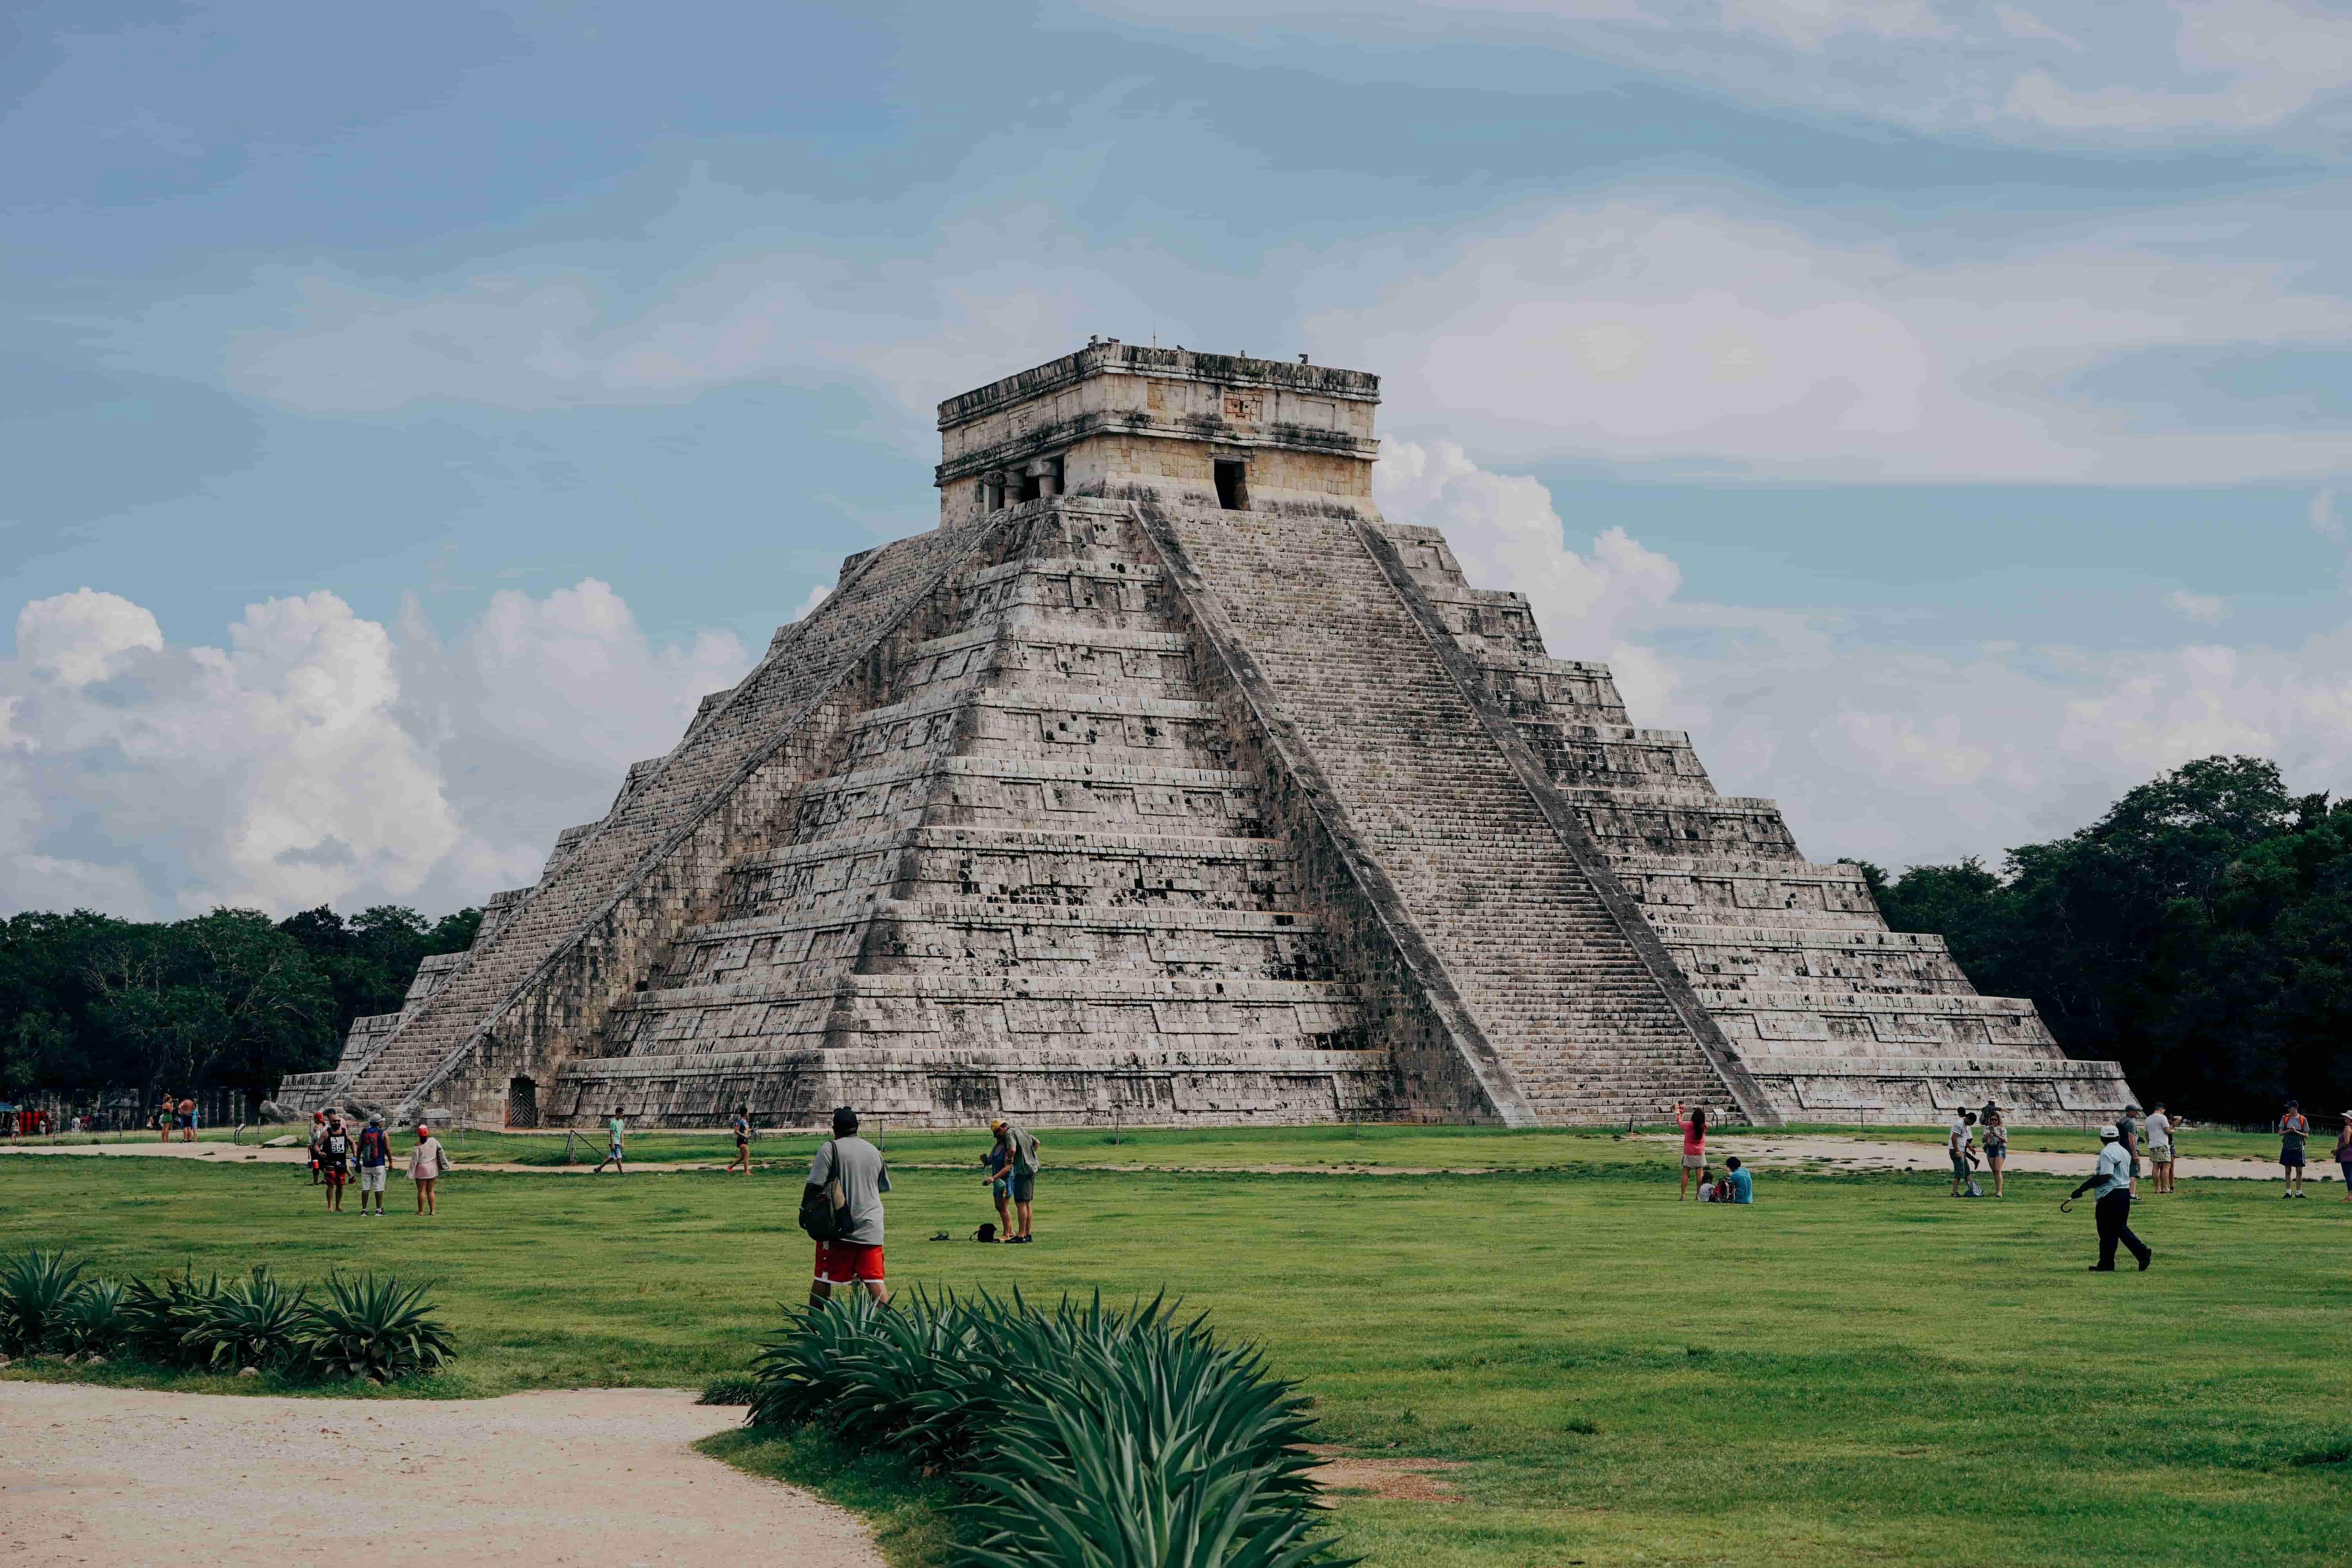 mexico city day trip to pyramids